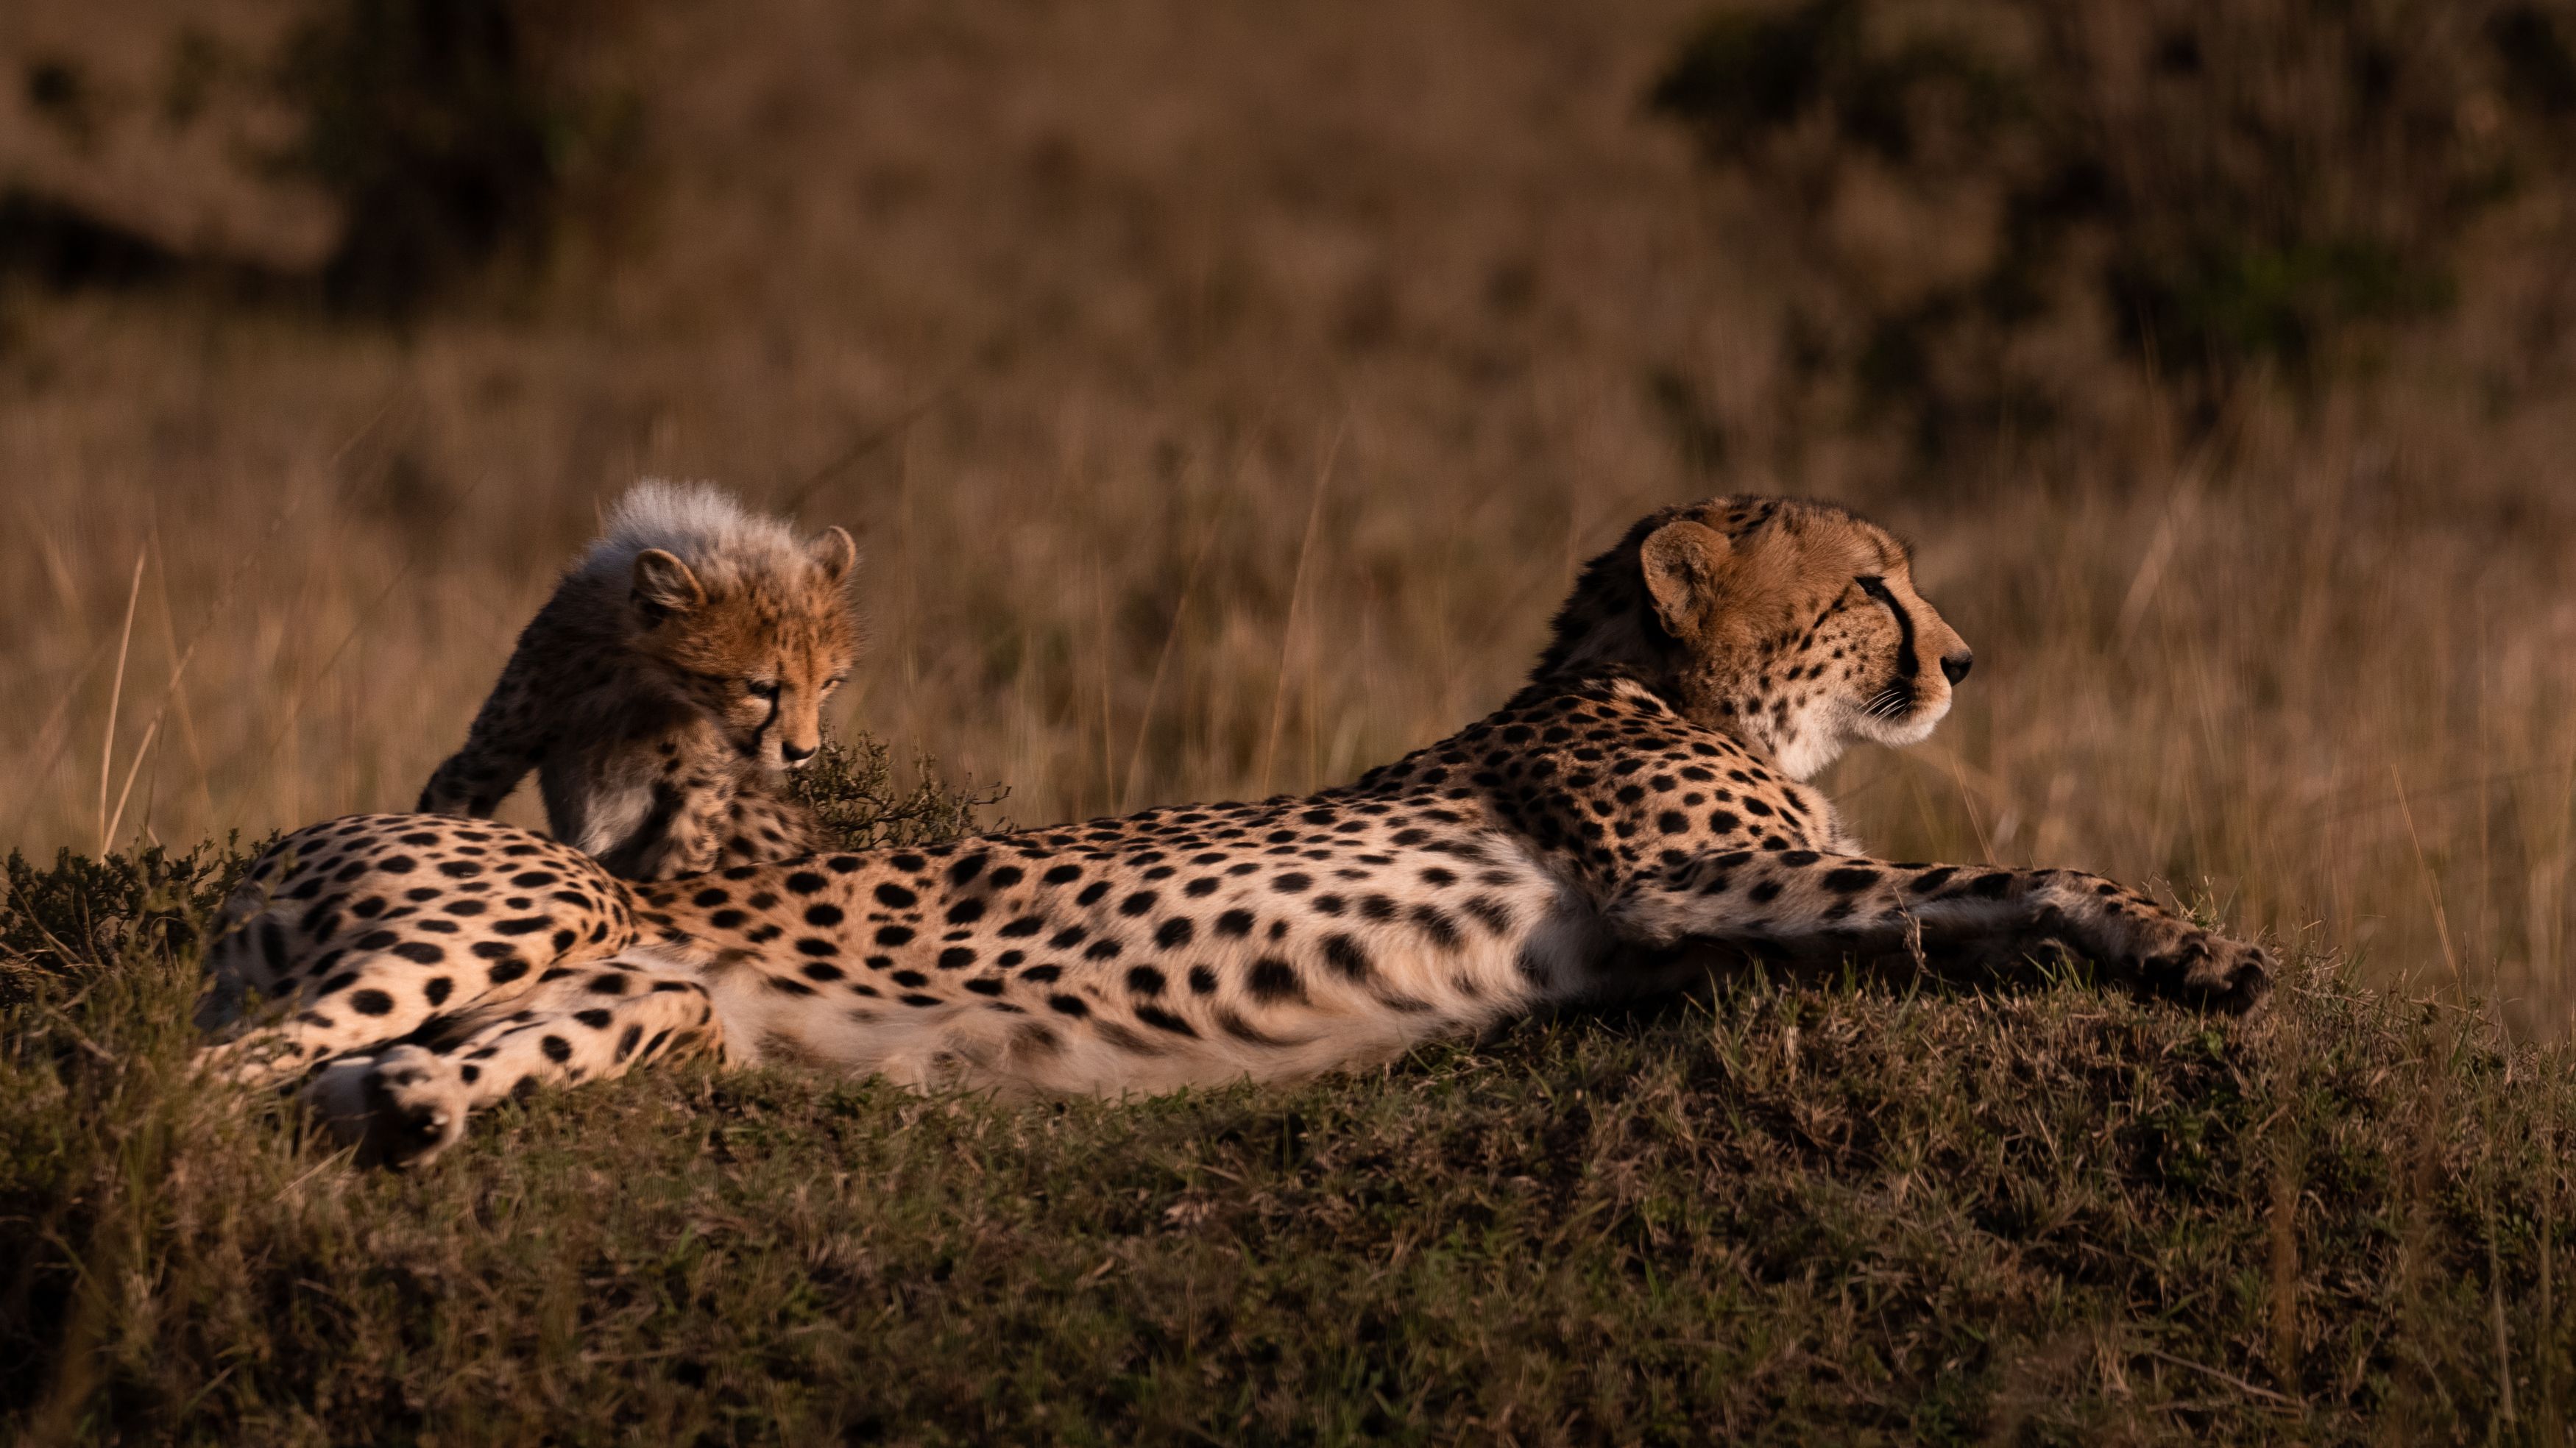 cheetah, africa, savanna, safati, kenya, animals, cat, big cat, big cats, cats, сафари, африка, кения, чита, гепард, Roman Bevzenko